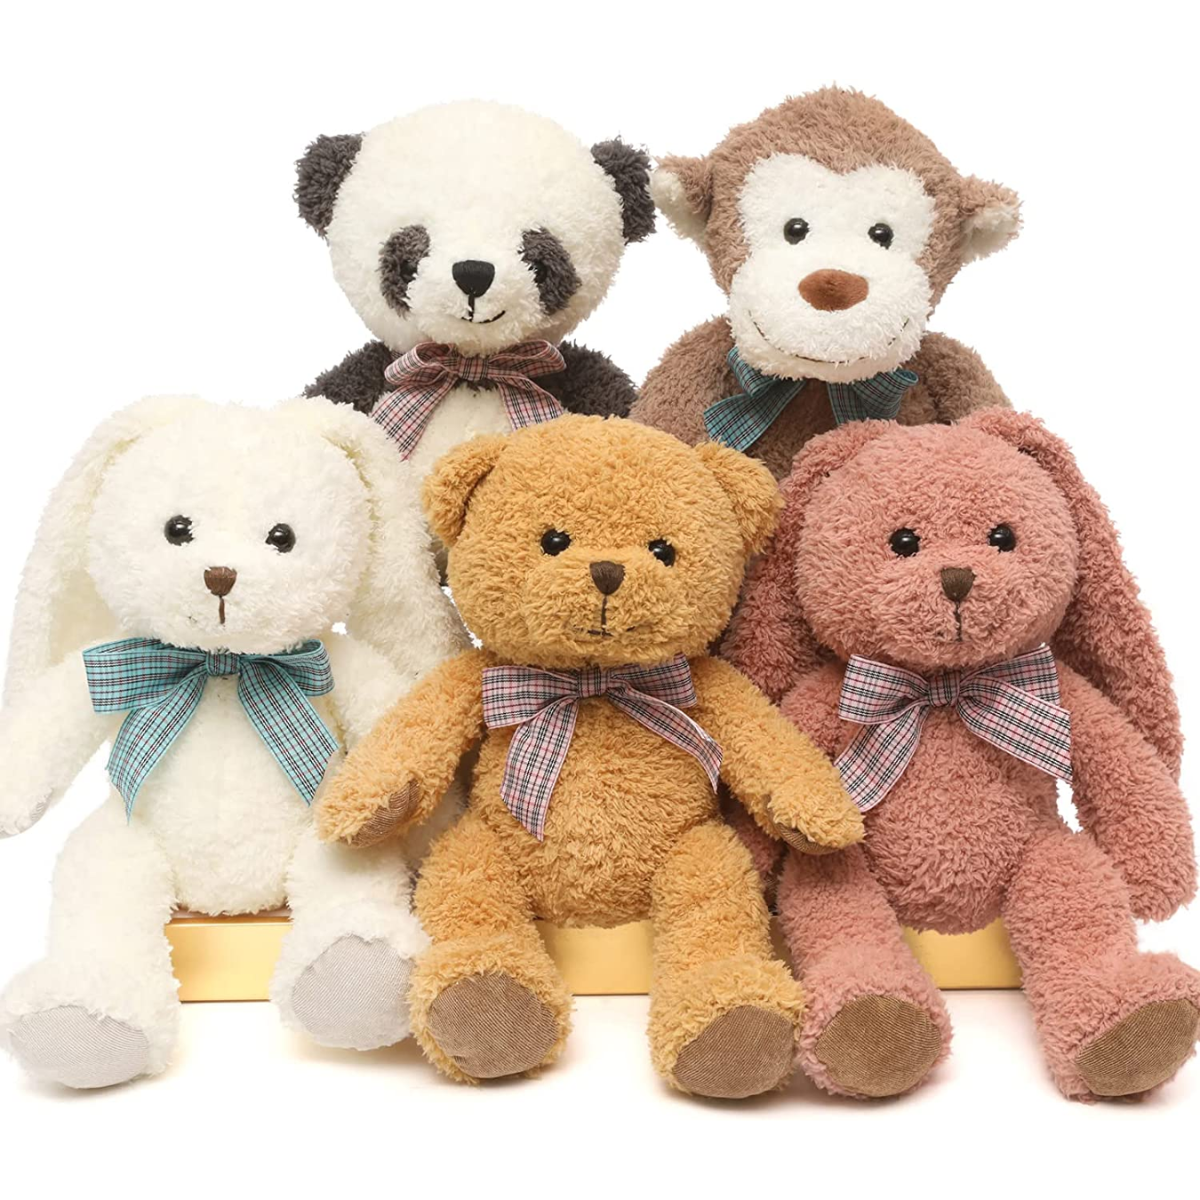 MorisMos 5 Packs Stuffed Animal Toy Set, 12.5 Inches